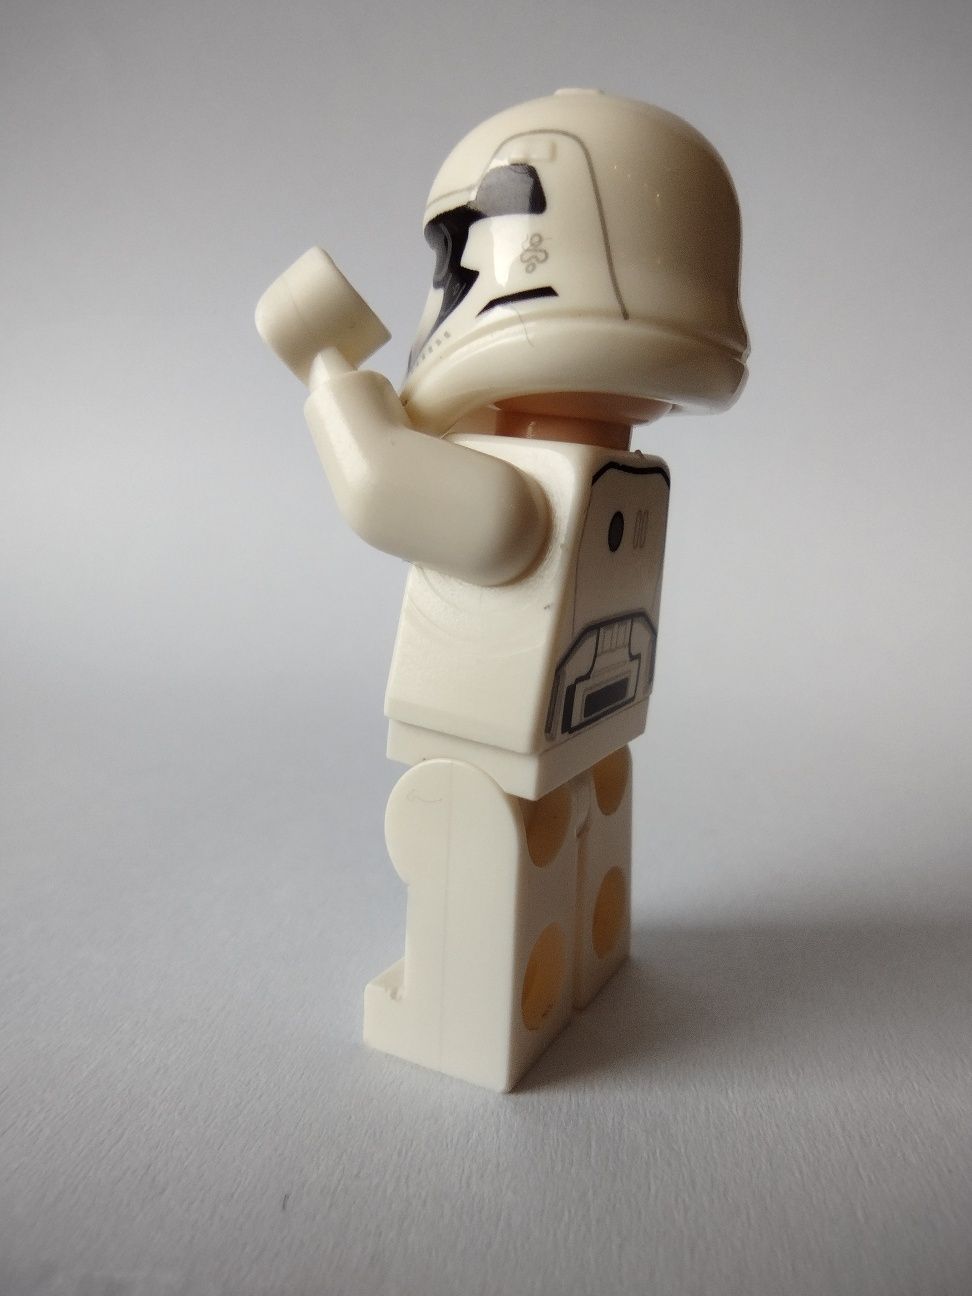 LEGO Star Wars - First Order Stormtrooper sw0905